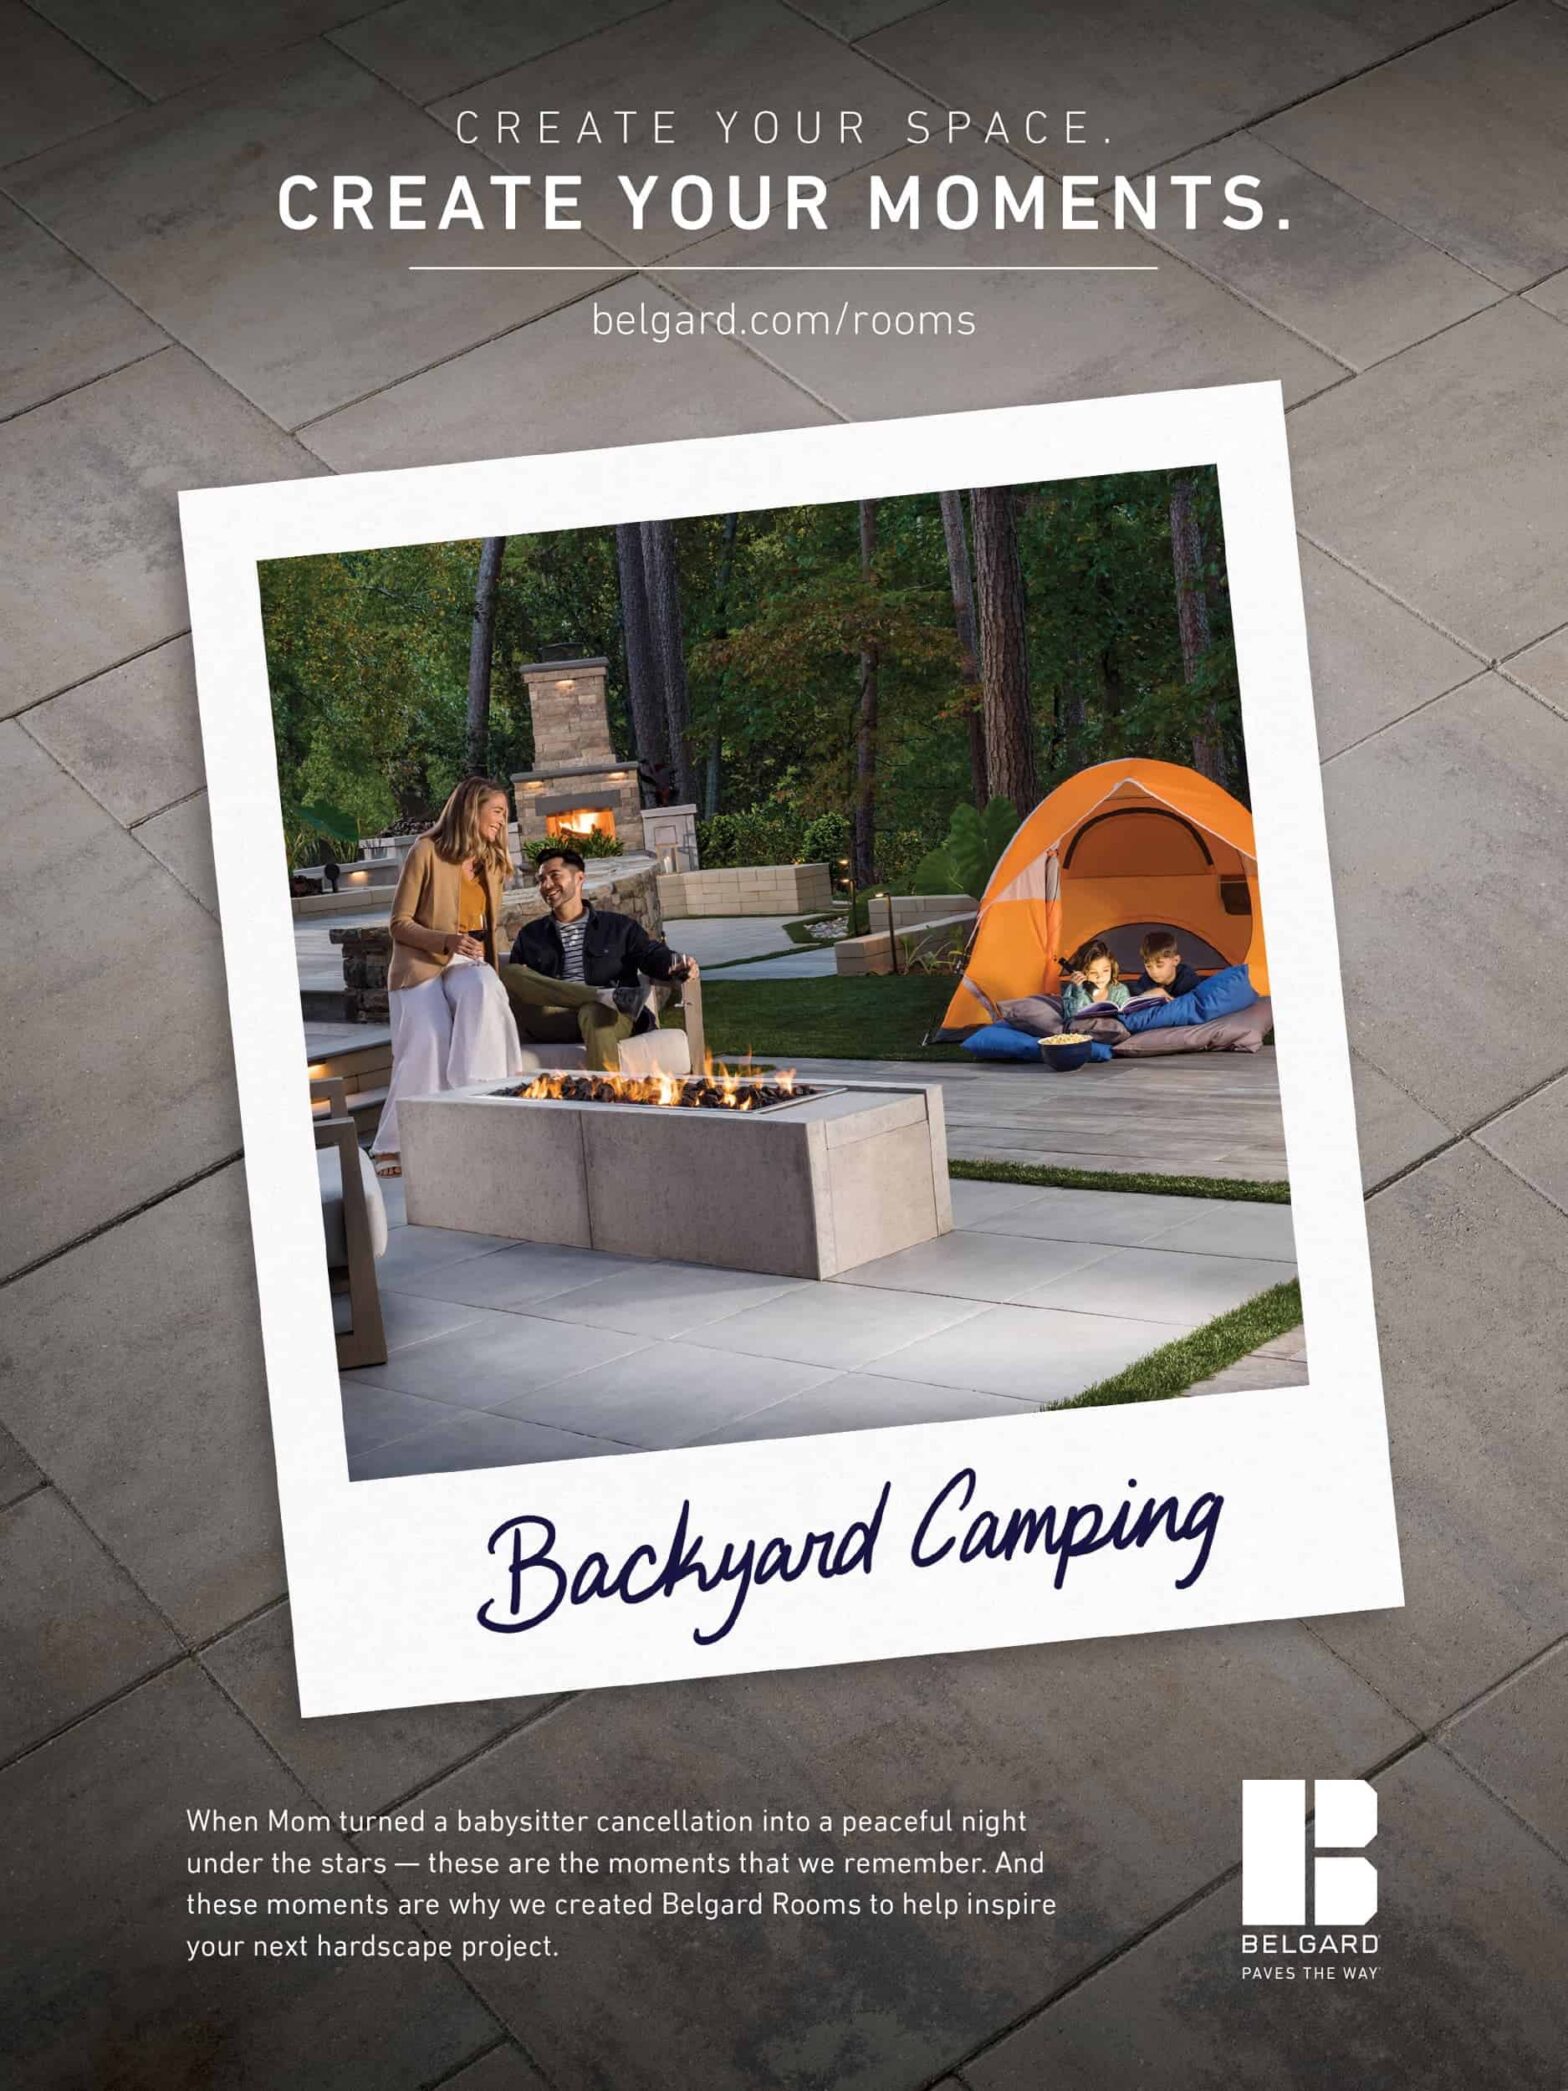 Belgard Rooms print ads that say "Backyard Camping"